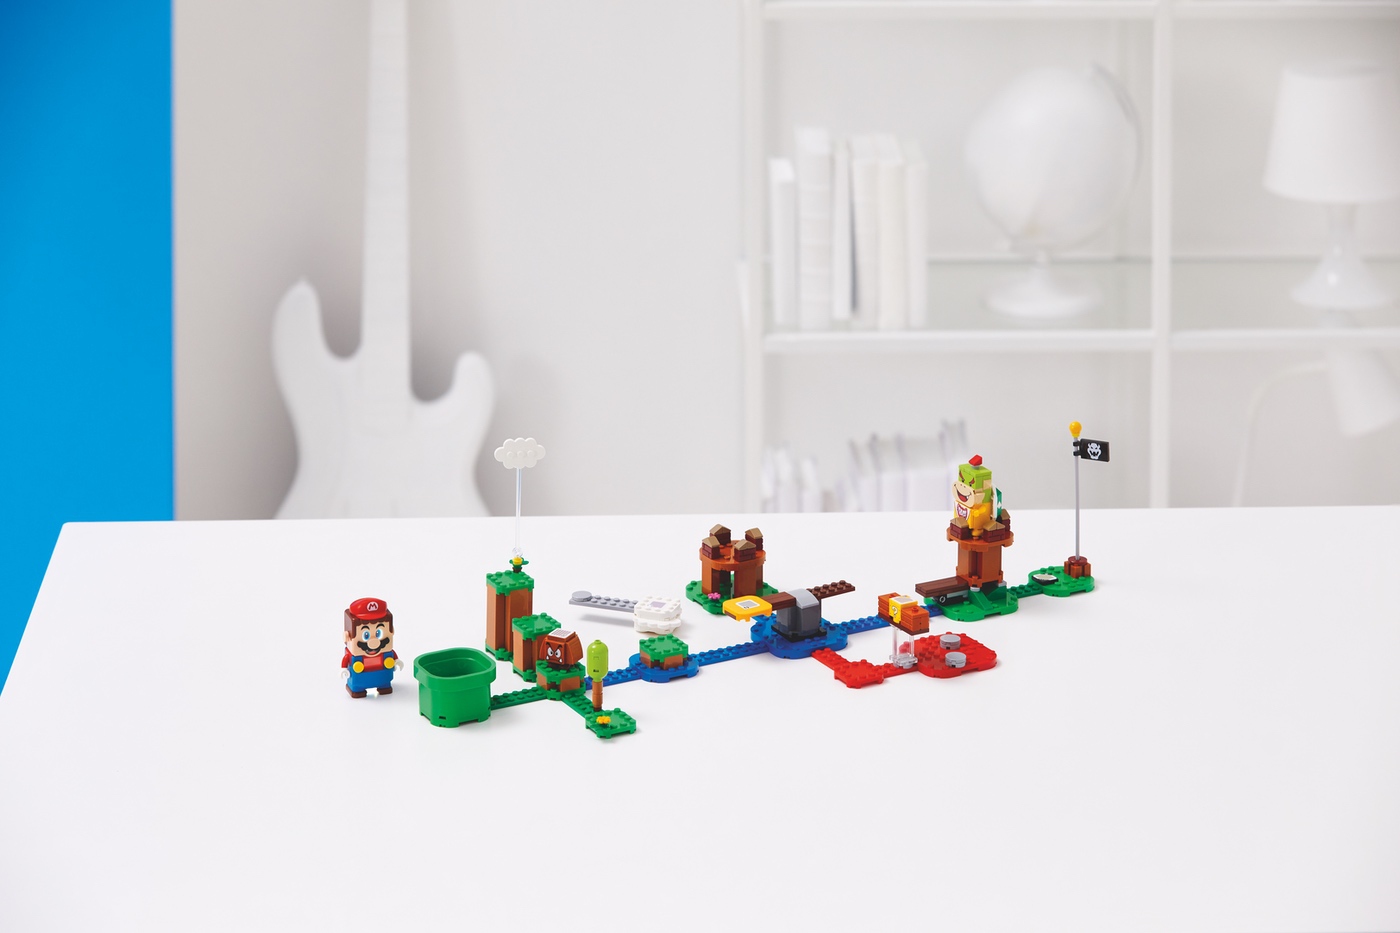 Pack de démarrage LEGO Super Mario